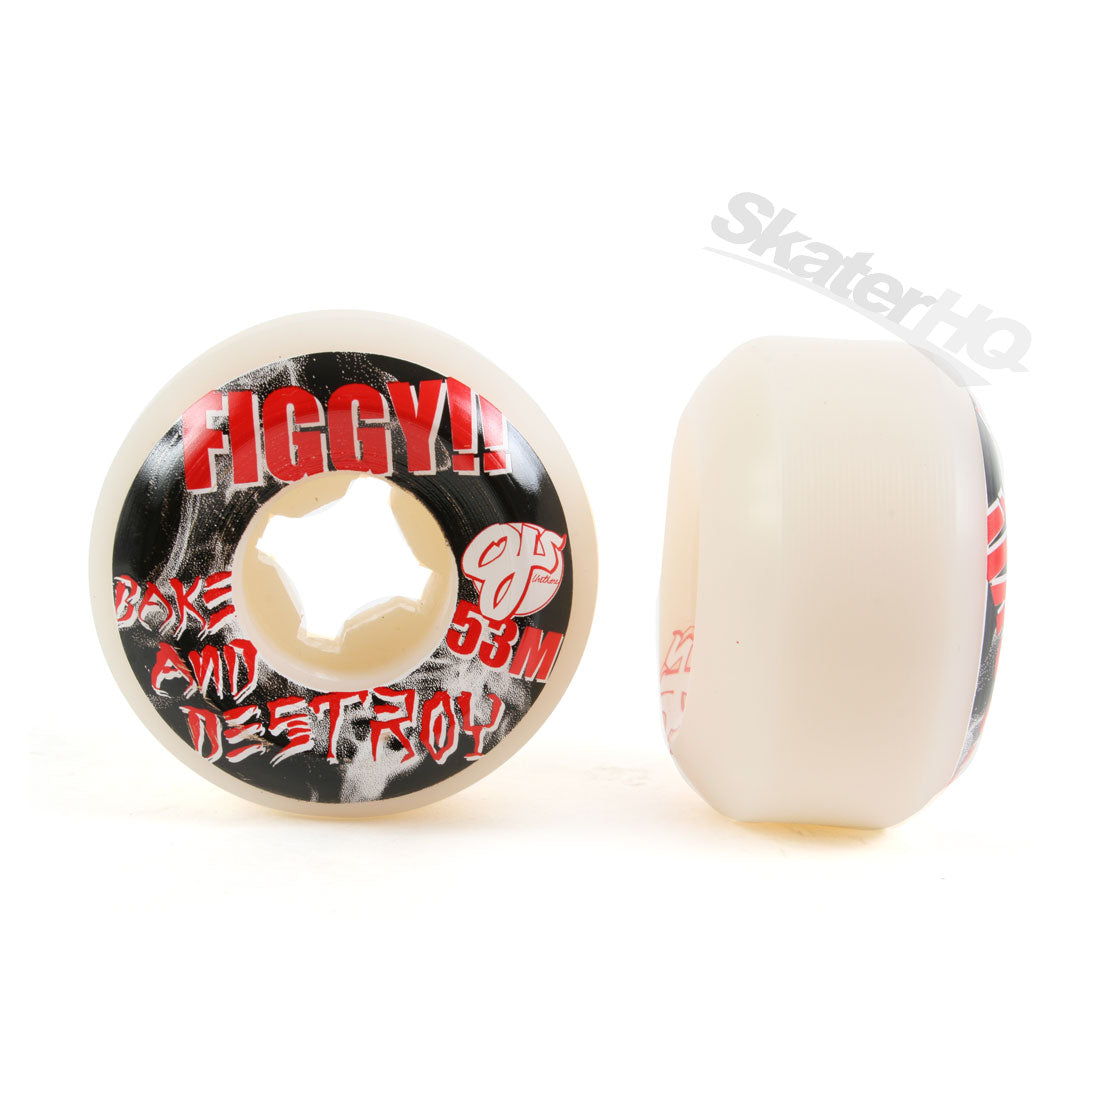 OJs Figgy Bake and Destroy 53mm White Skateboard Wheels